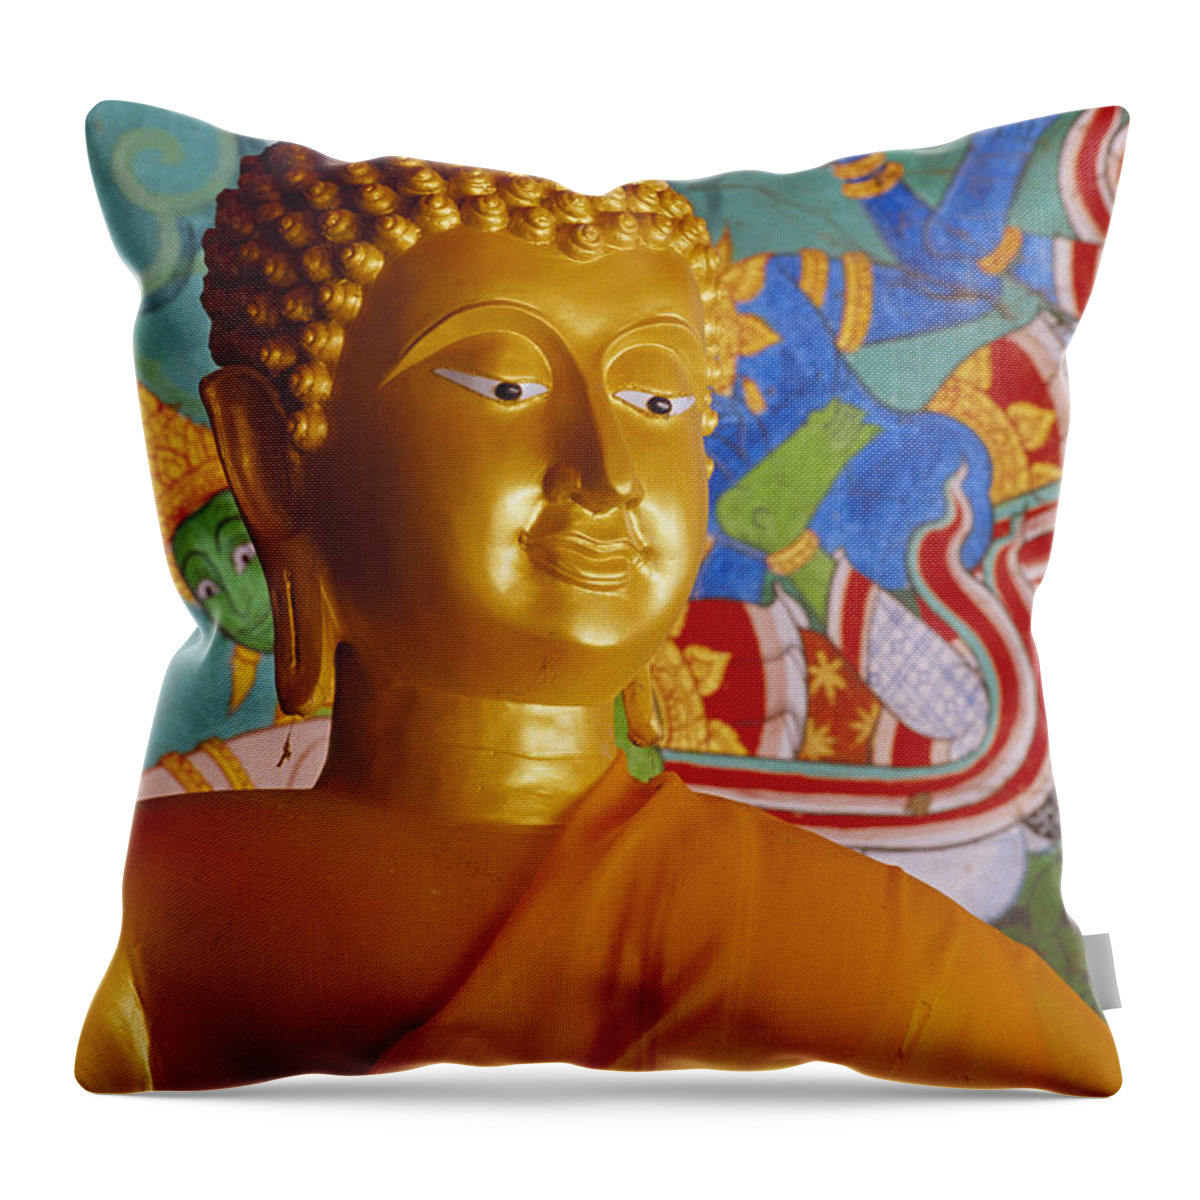 Asian Art Throw Pillow featuring the photograph Thailand, Lop Buri #1 by Bill Brennan - Printscapes